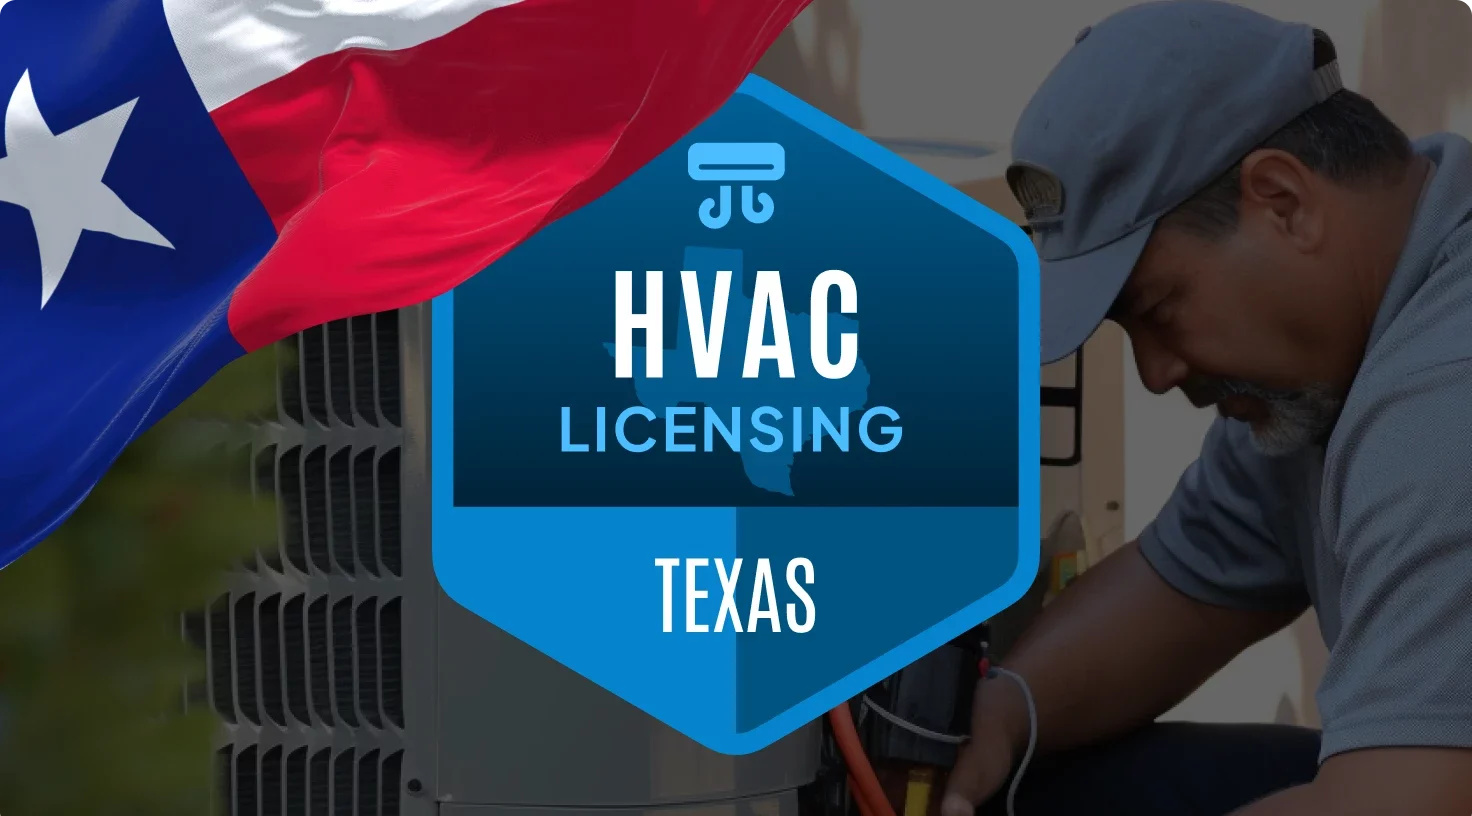 Hvac Texas License Aspect Ratio 1472 816 Aspect Ratio 1472 816